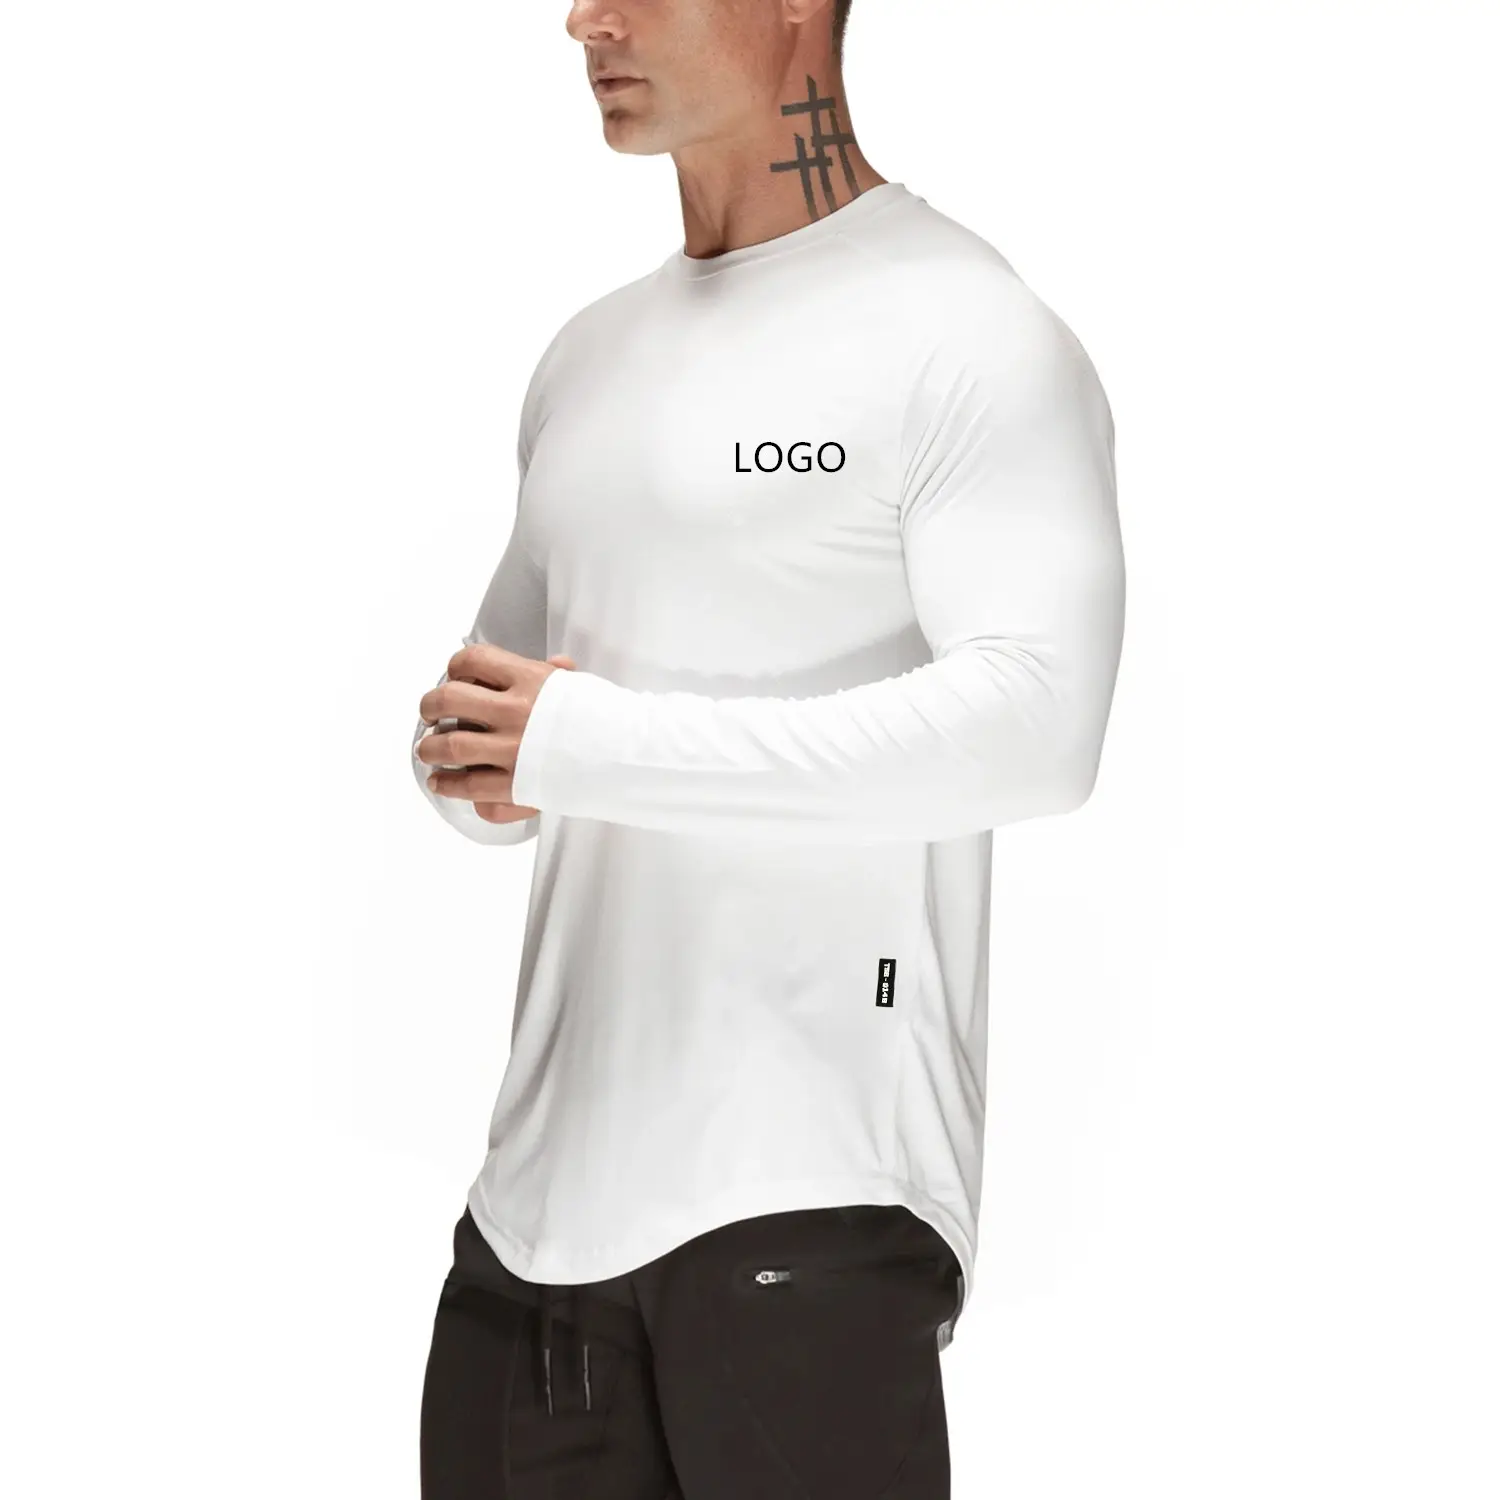 Camiseta blanca personalizada de algodón para hombre, camiseta atlética de gimnasio, camiseta de manga larga estampada